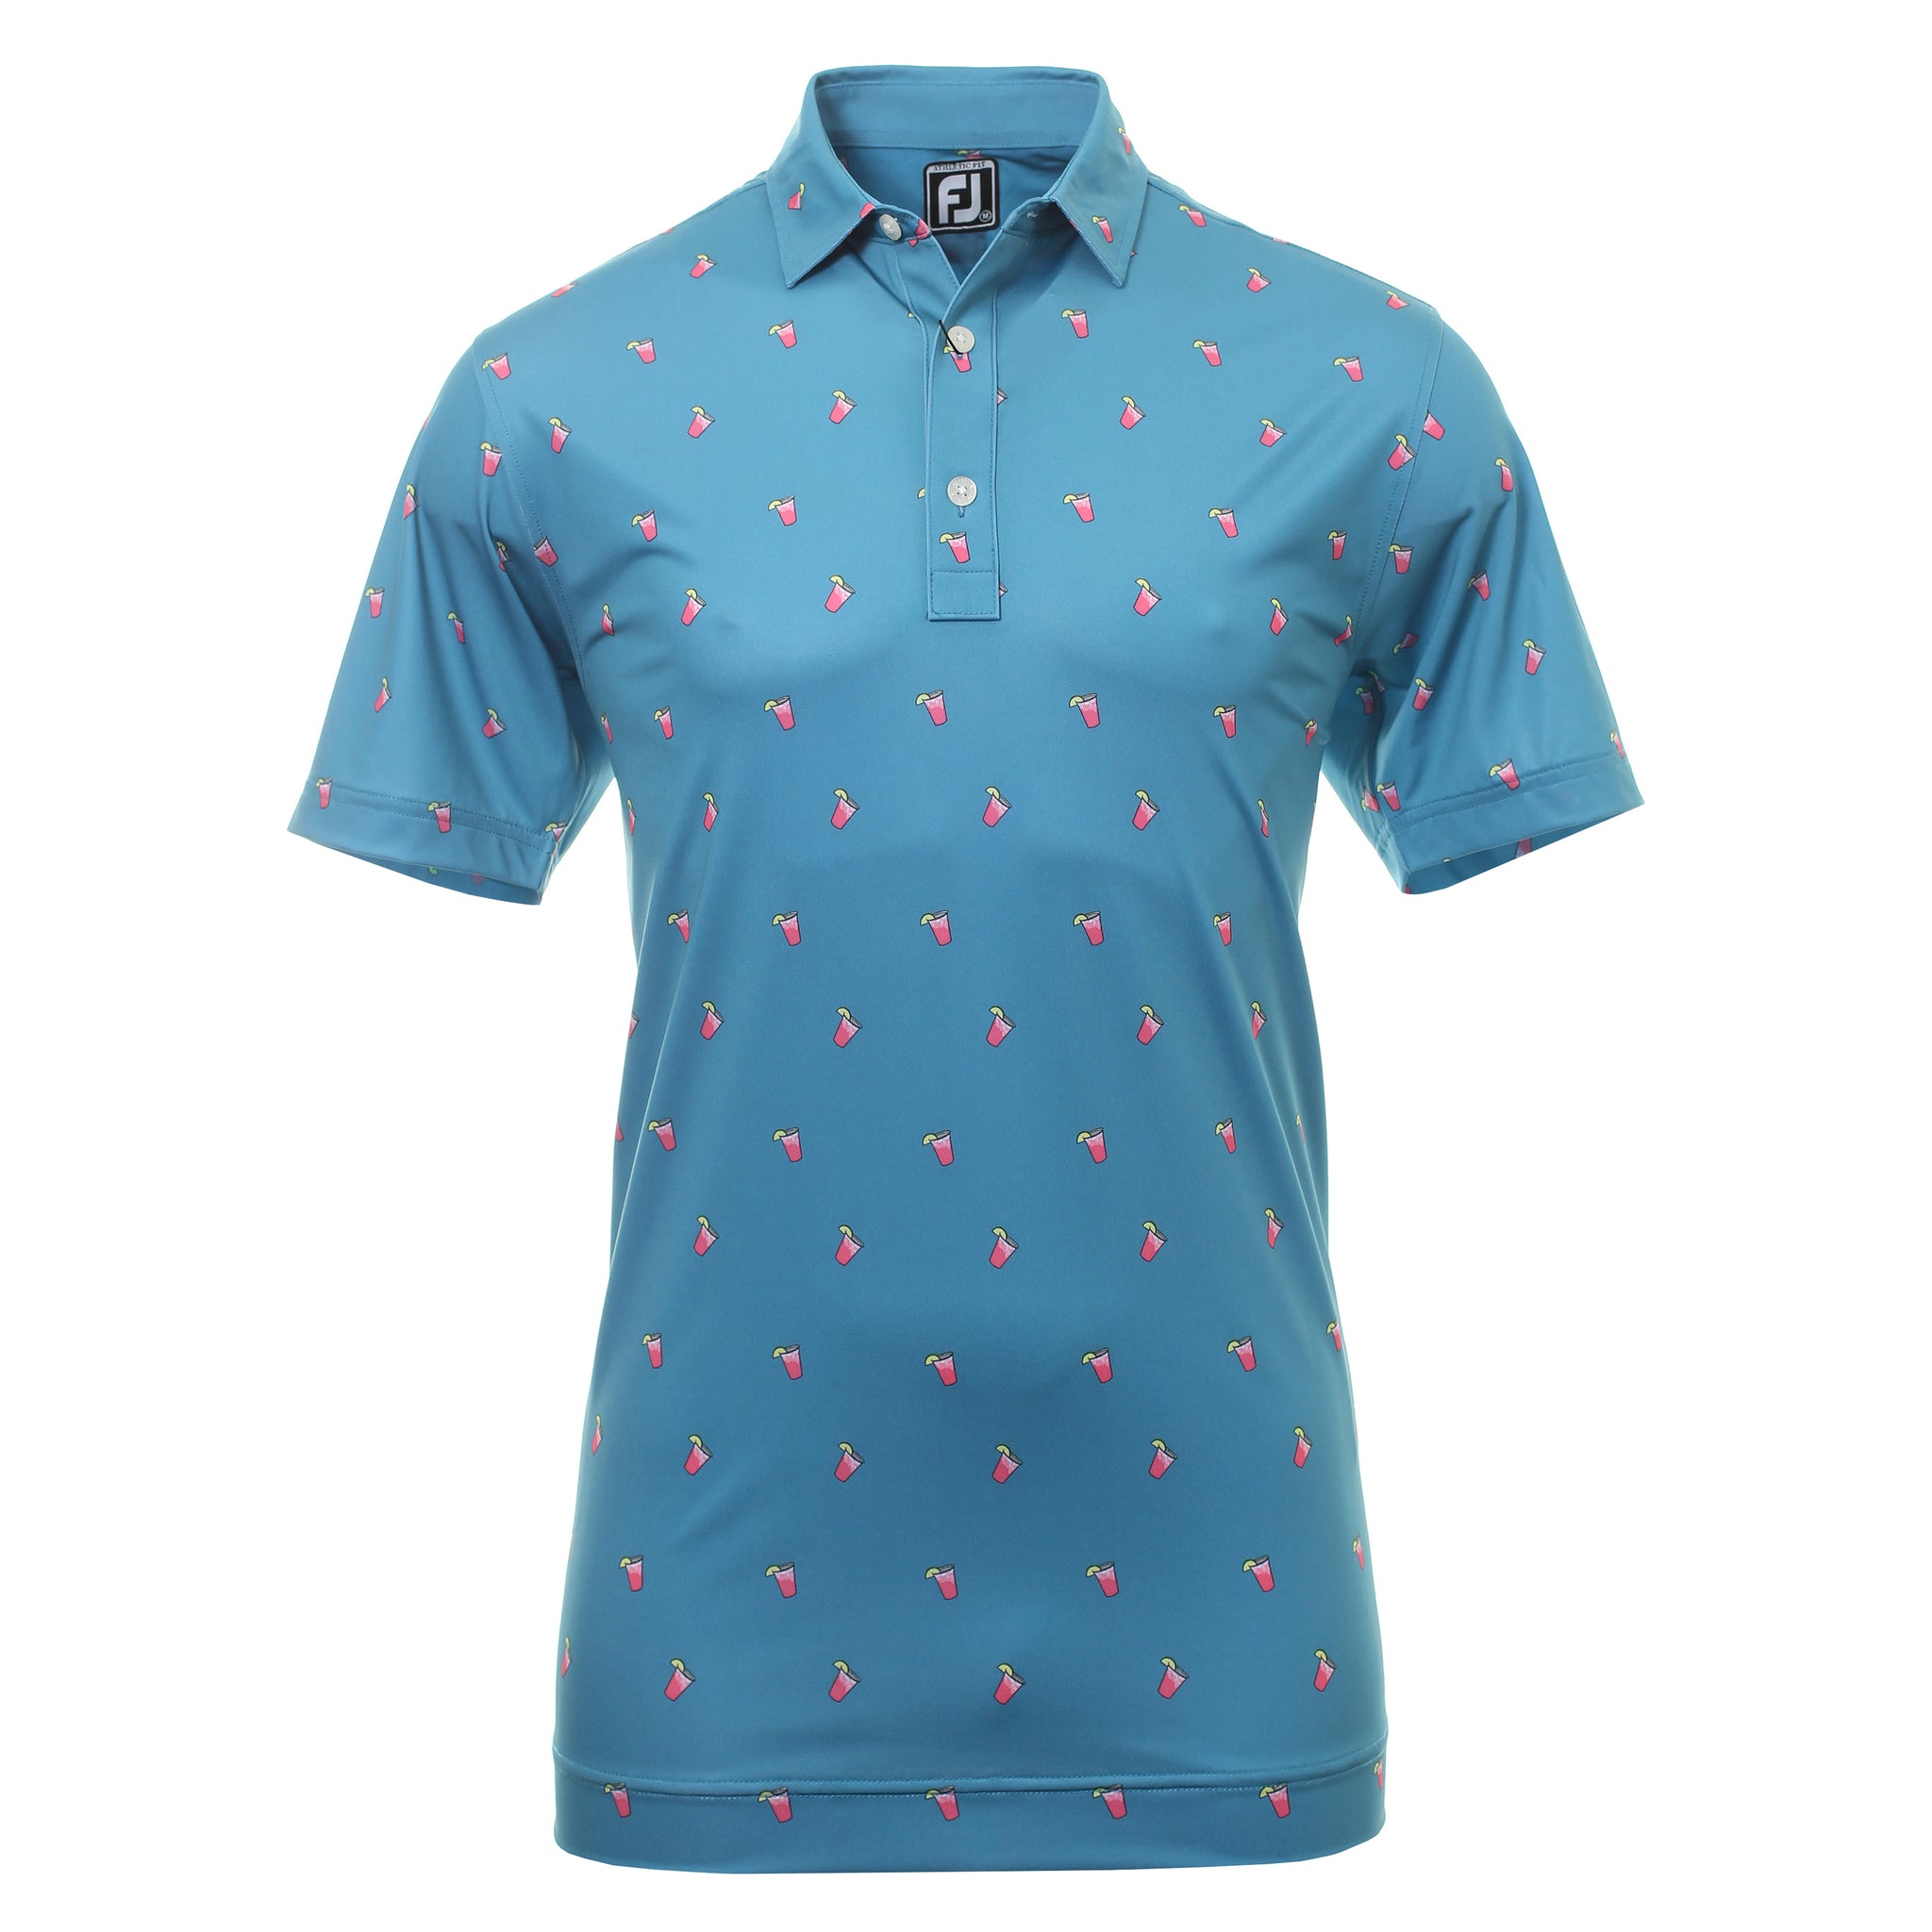 FootJoy Cocktail Print Golf Shirt 84417 Storm Blue | Function18 ...